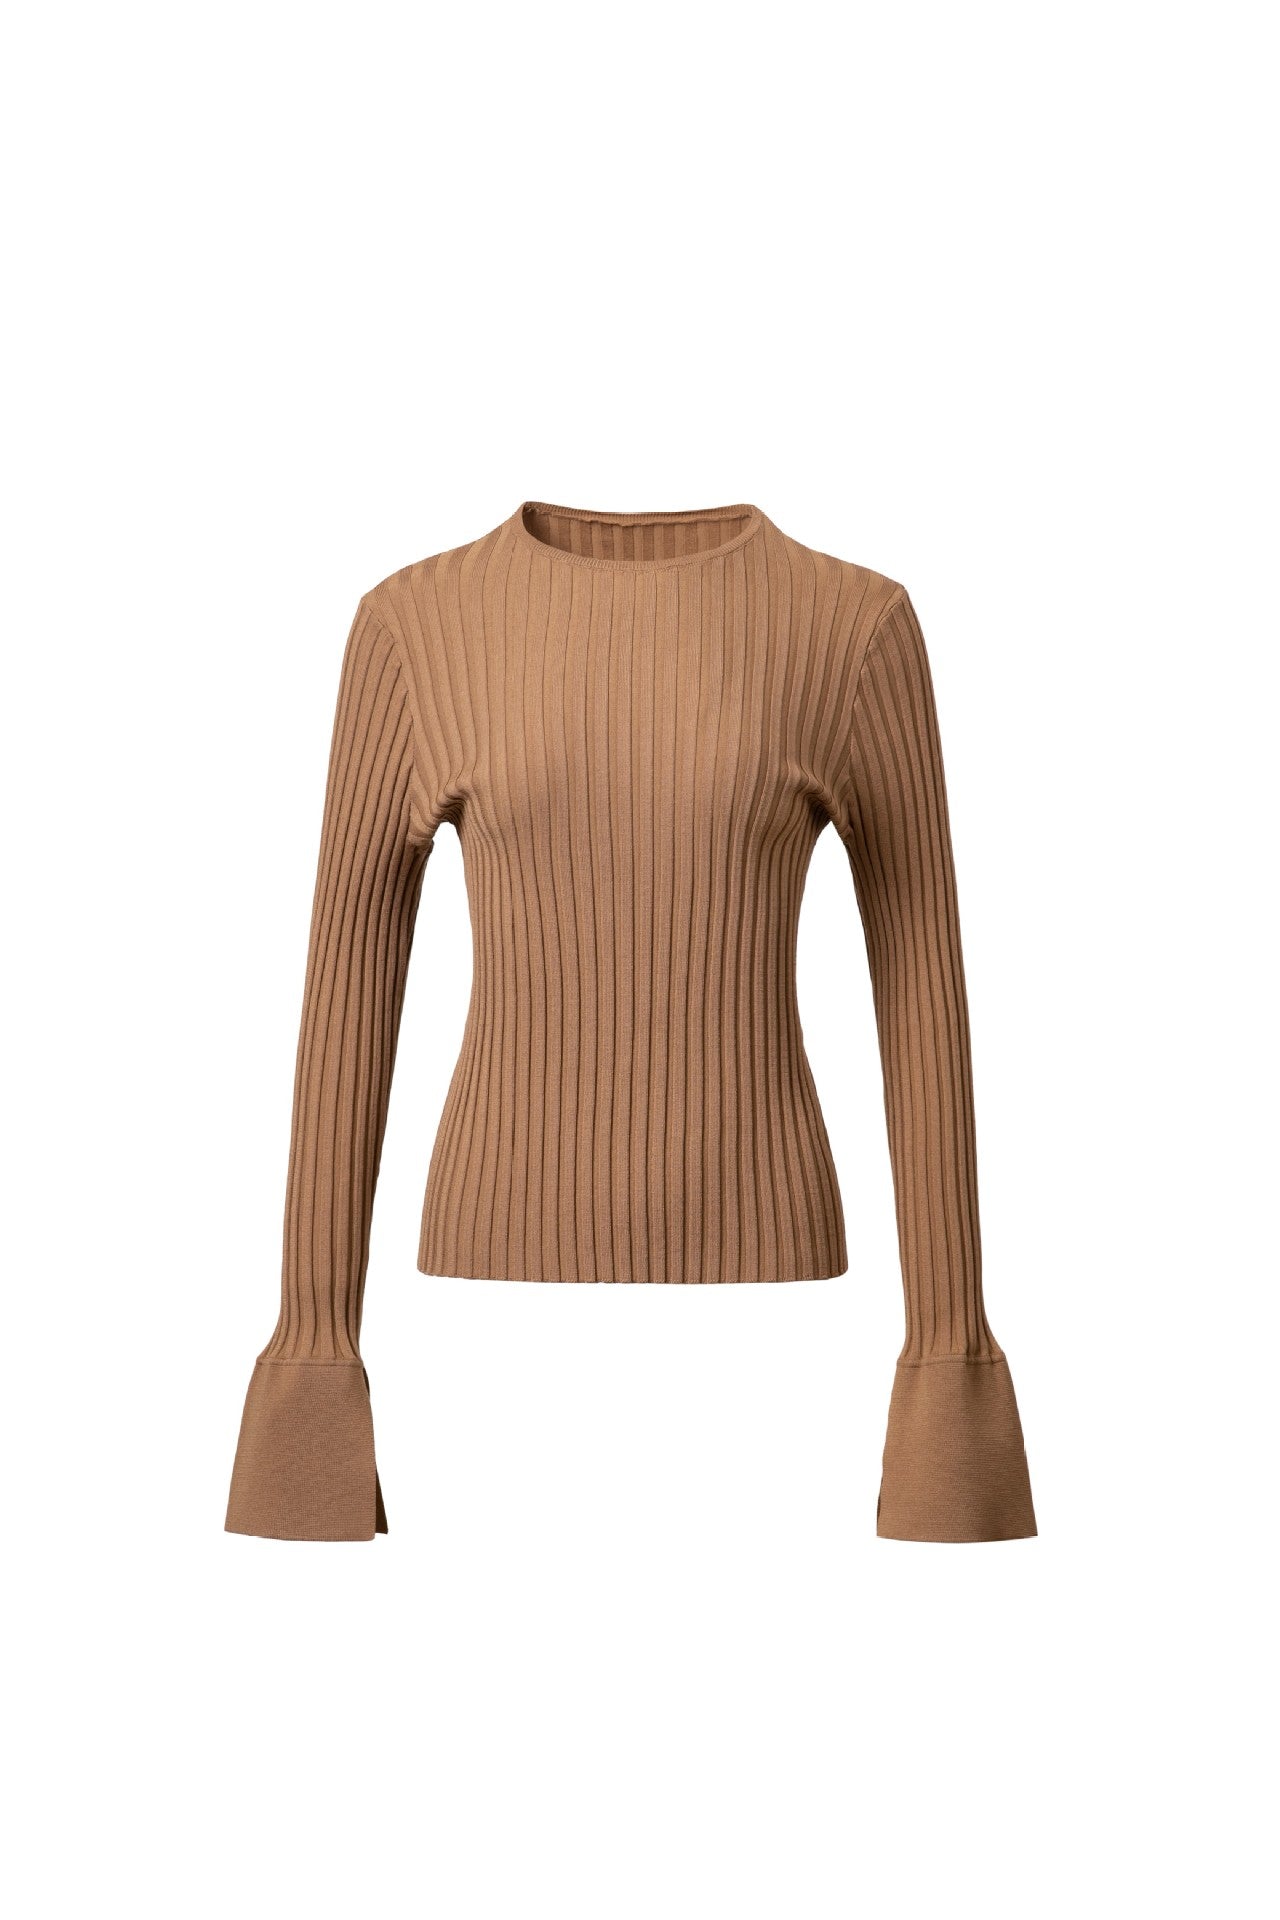 Bell sleeve striped sweater_BDHL5683